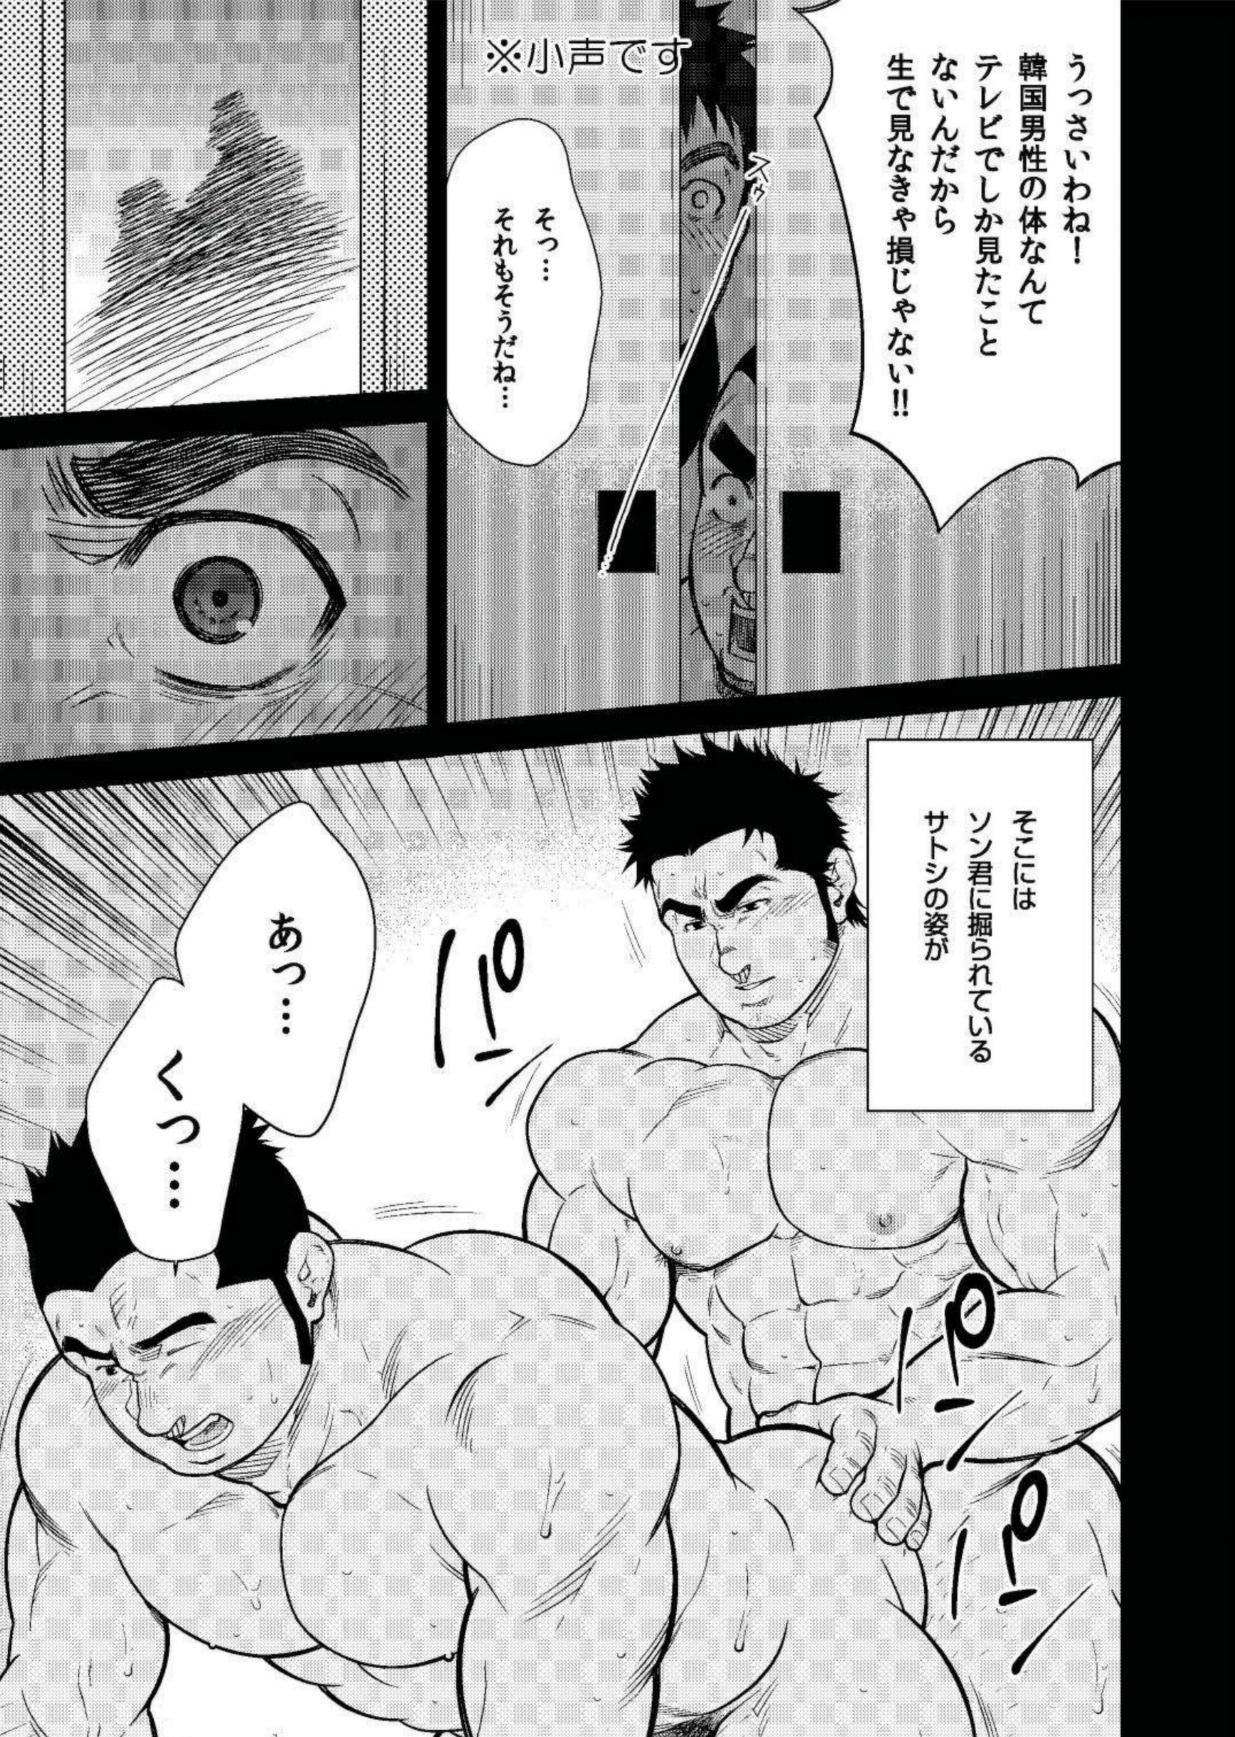 Bizarre Terujirou - 晃次郎 - Badi Bʌ́di (バディ) 119 (Jan 2016) Big Dick - Page 5